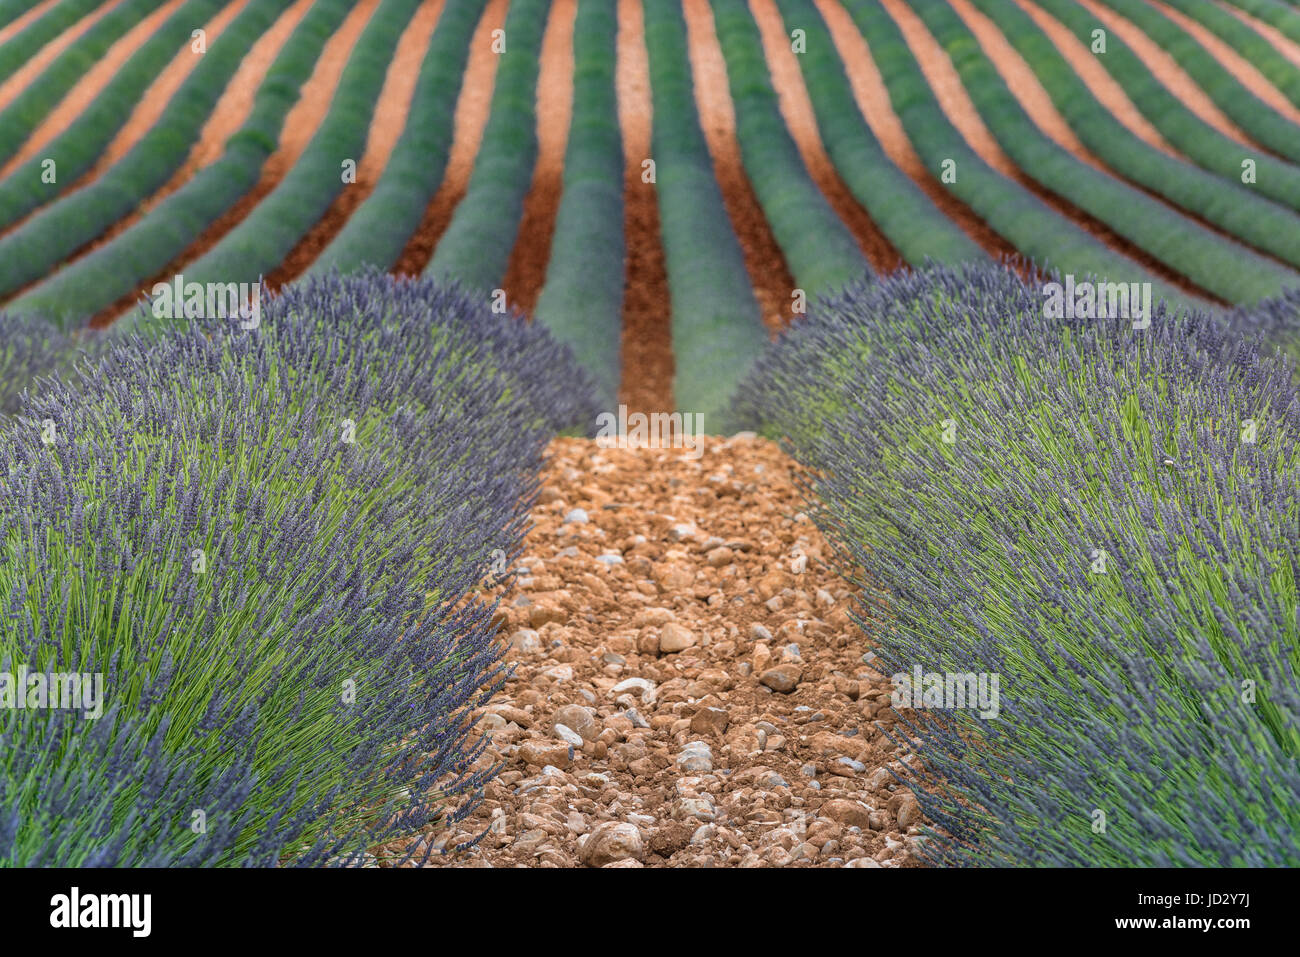 Download Lavender Field Under Peach Dusk Skies Wallpaper